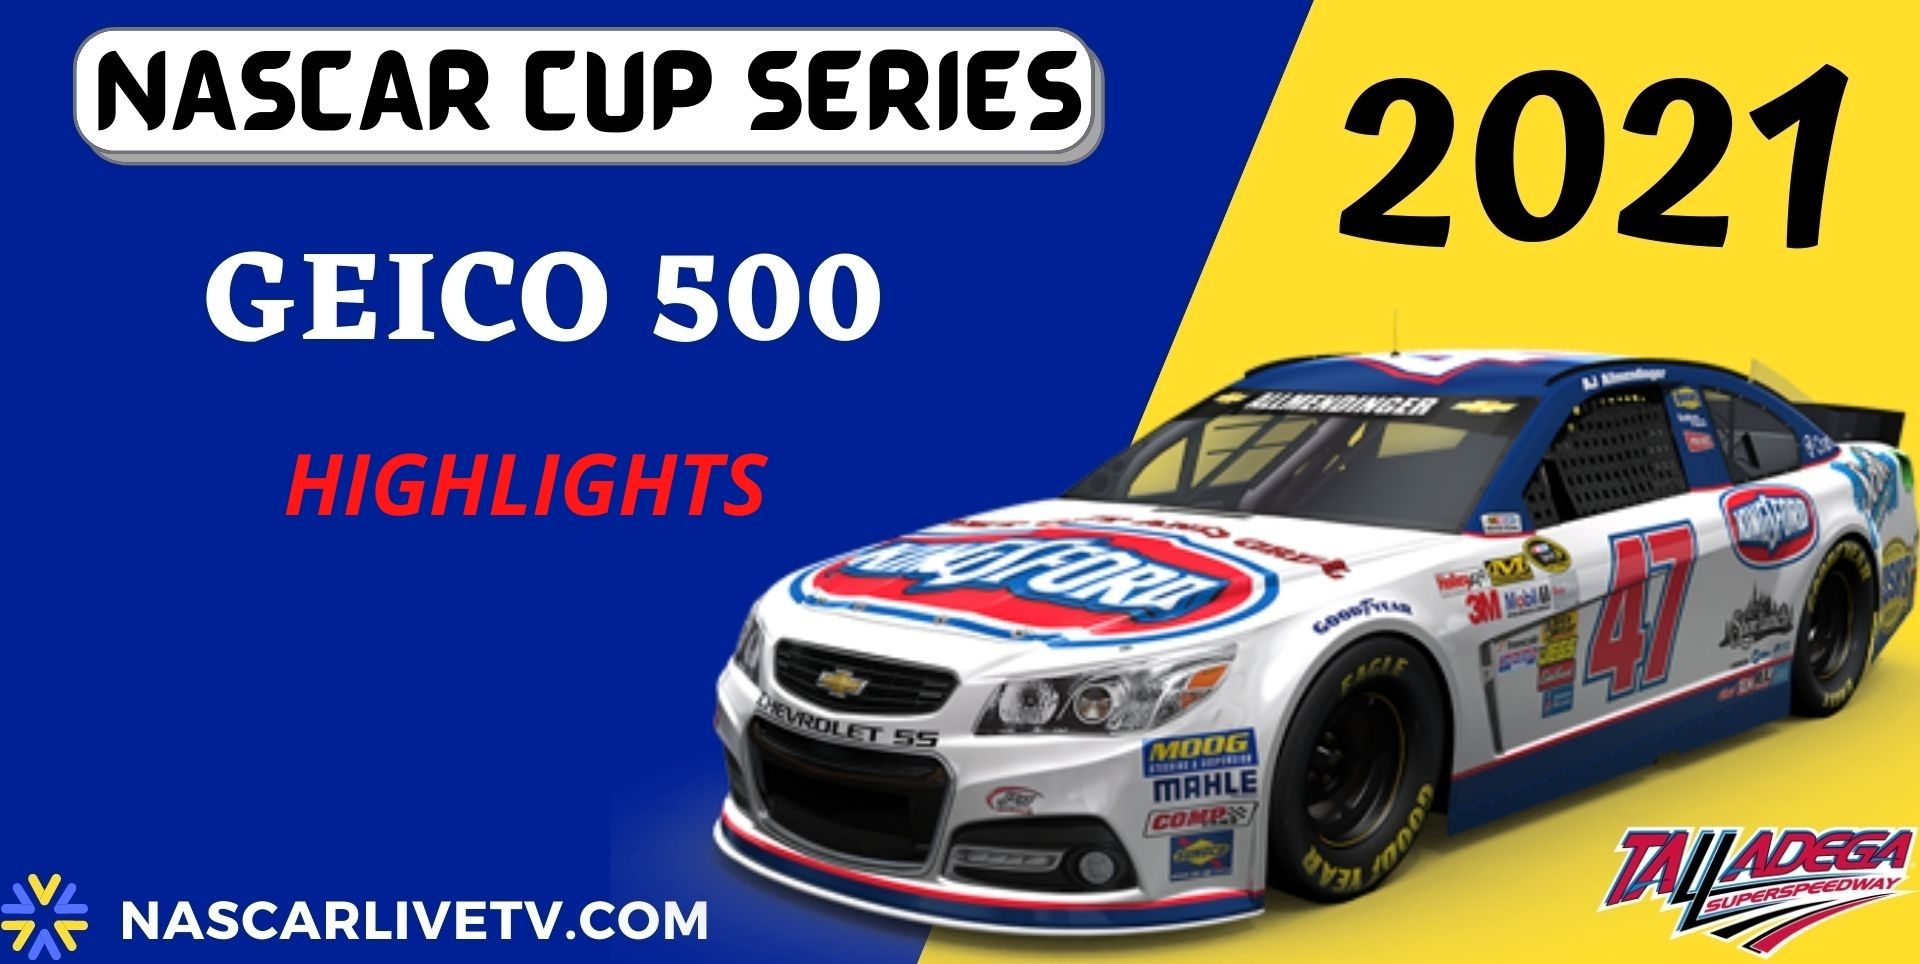 GEICO 500 NASCAR Cup Series Highlights 2021